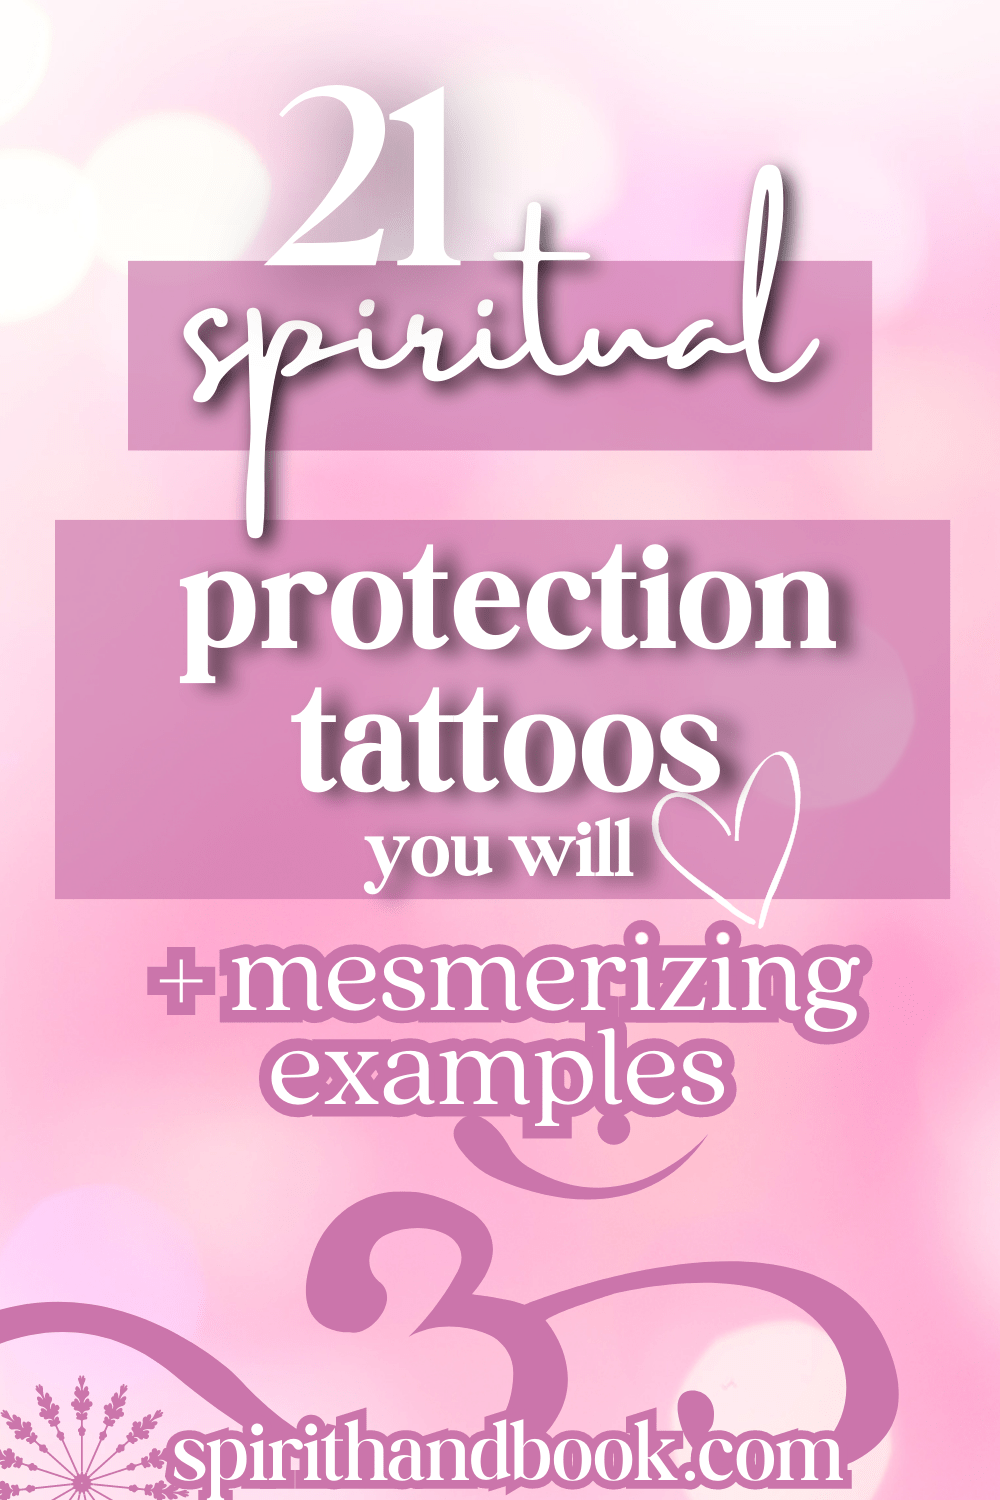 21 Spiritual Protection Tattoo Ideas You’ll LOVE